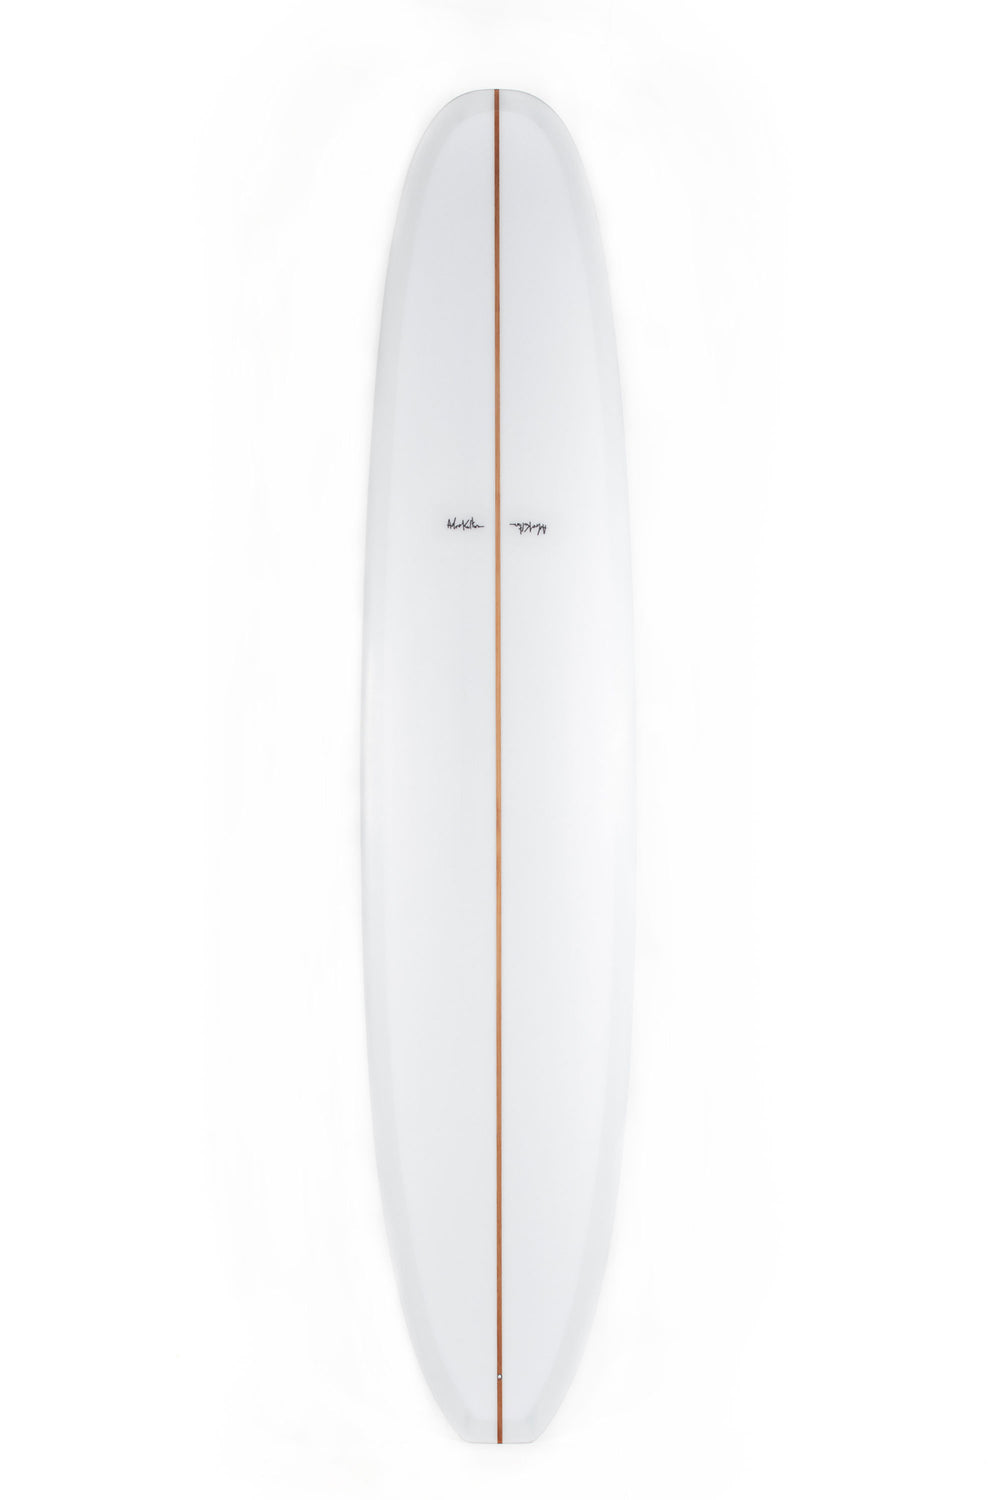 Pukas Surf Shop - Adrokultura Surfboards - BOB'S - 9'4